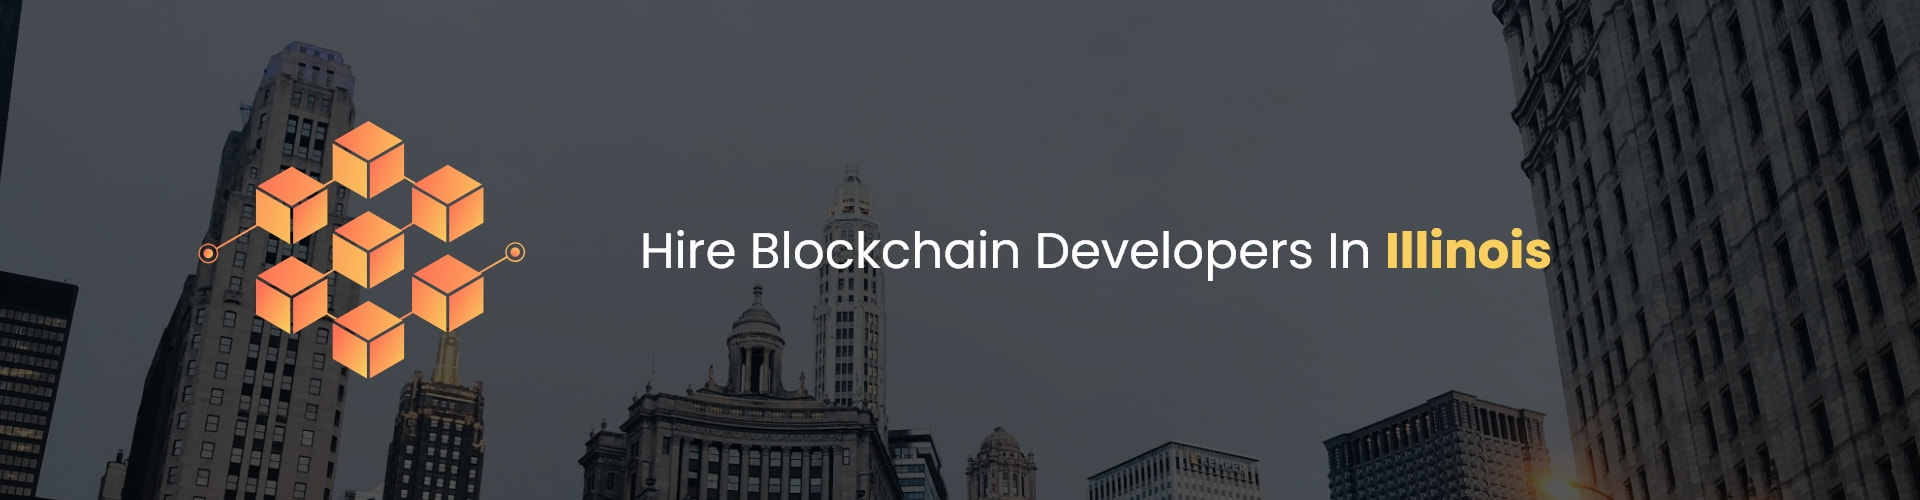 hire blockchain developers in illinois